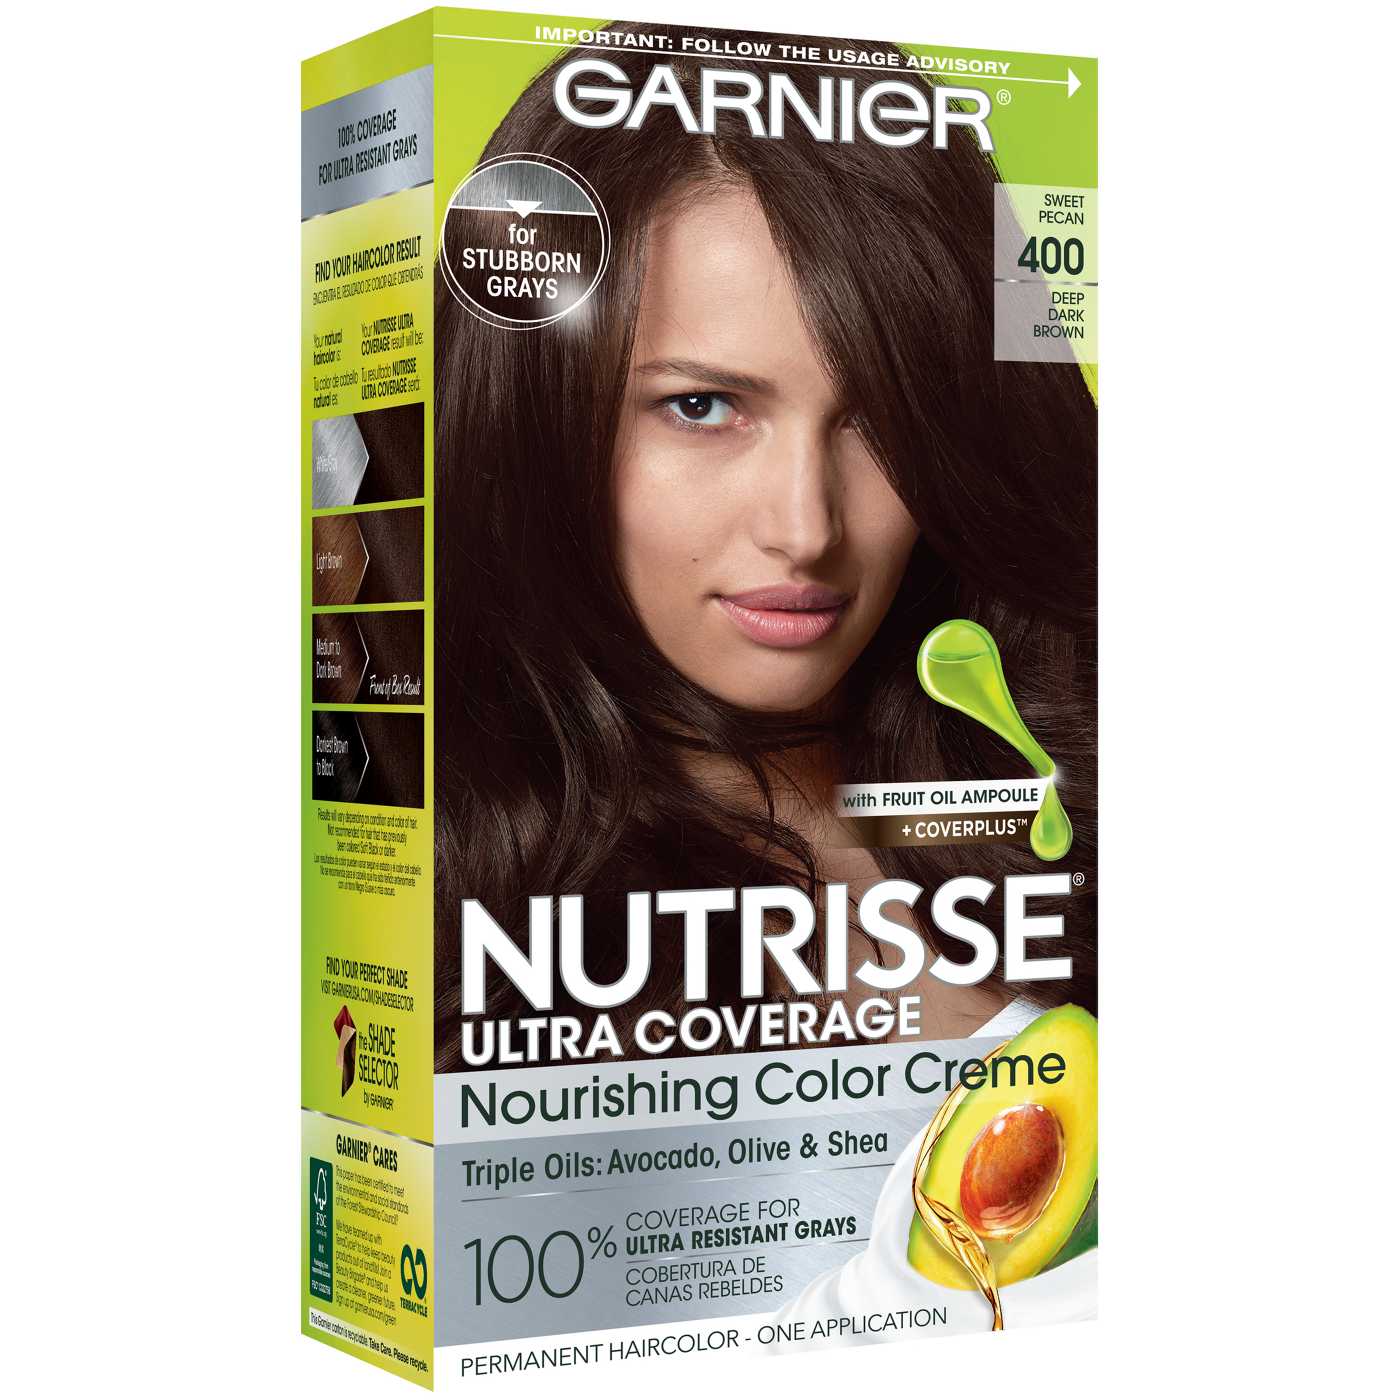 Garnier Nutrisse Ultra Coverage Nourishing Permanent Hair Color Creme for  Stubborn Gray Coverage Deep Dark Brown (Sweet Pecan) 400 - Shop Hair Color  at H-E-B